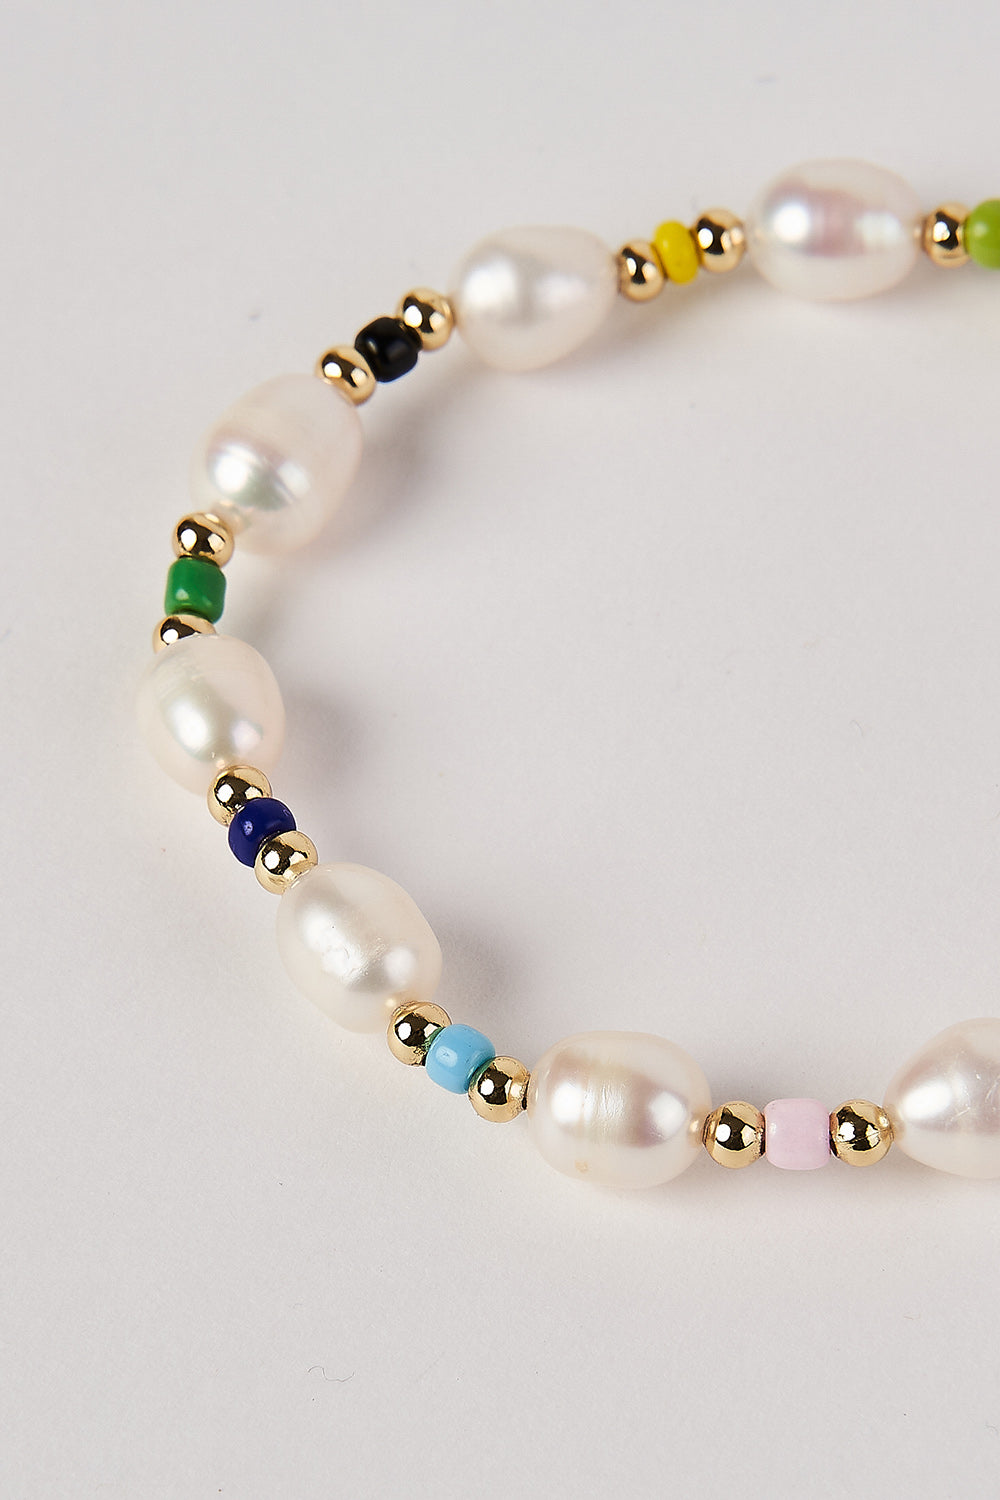 Create Beautiful Pearl Yarn Bracelets: Easy DIY Tutorial - YouTube